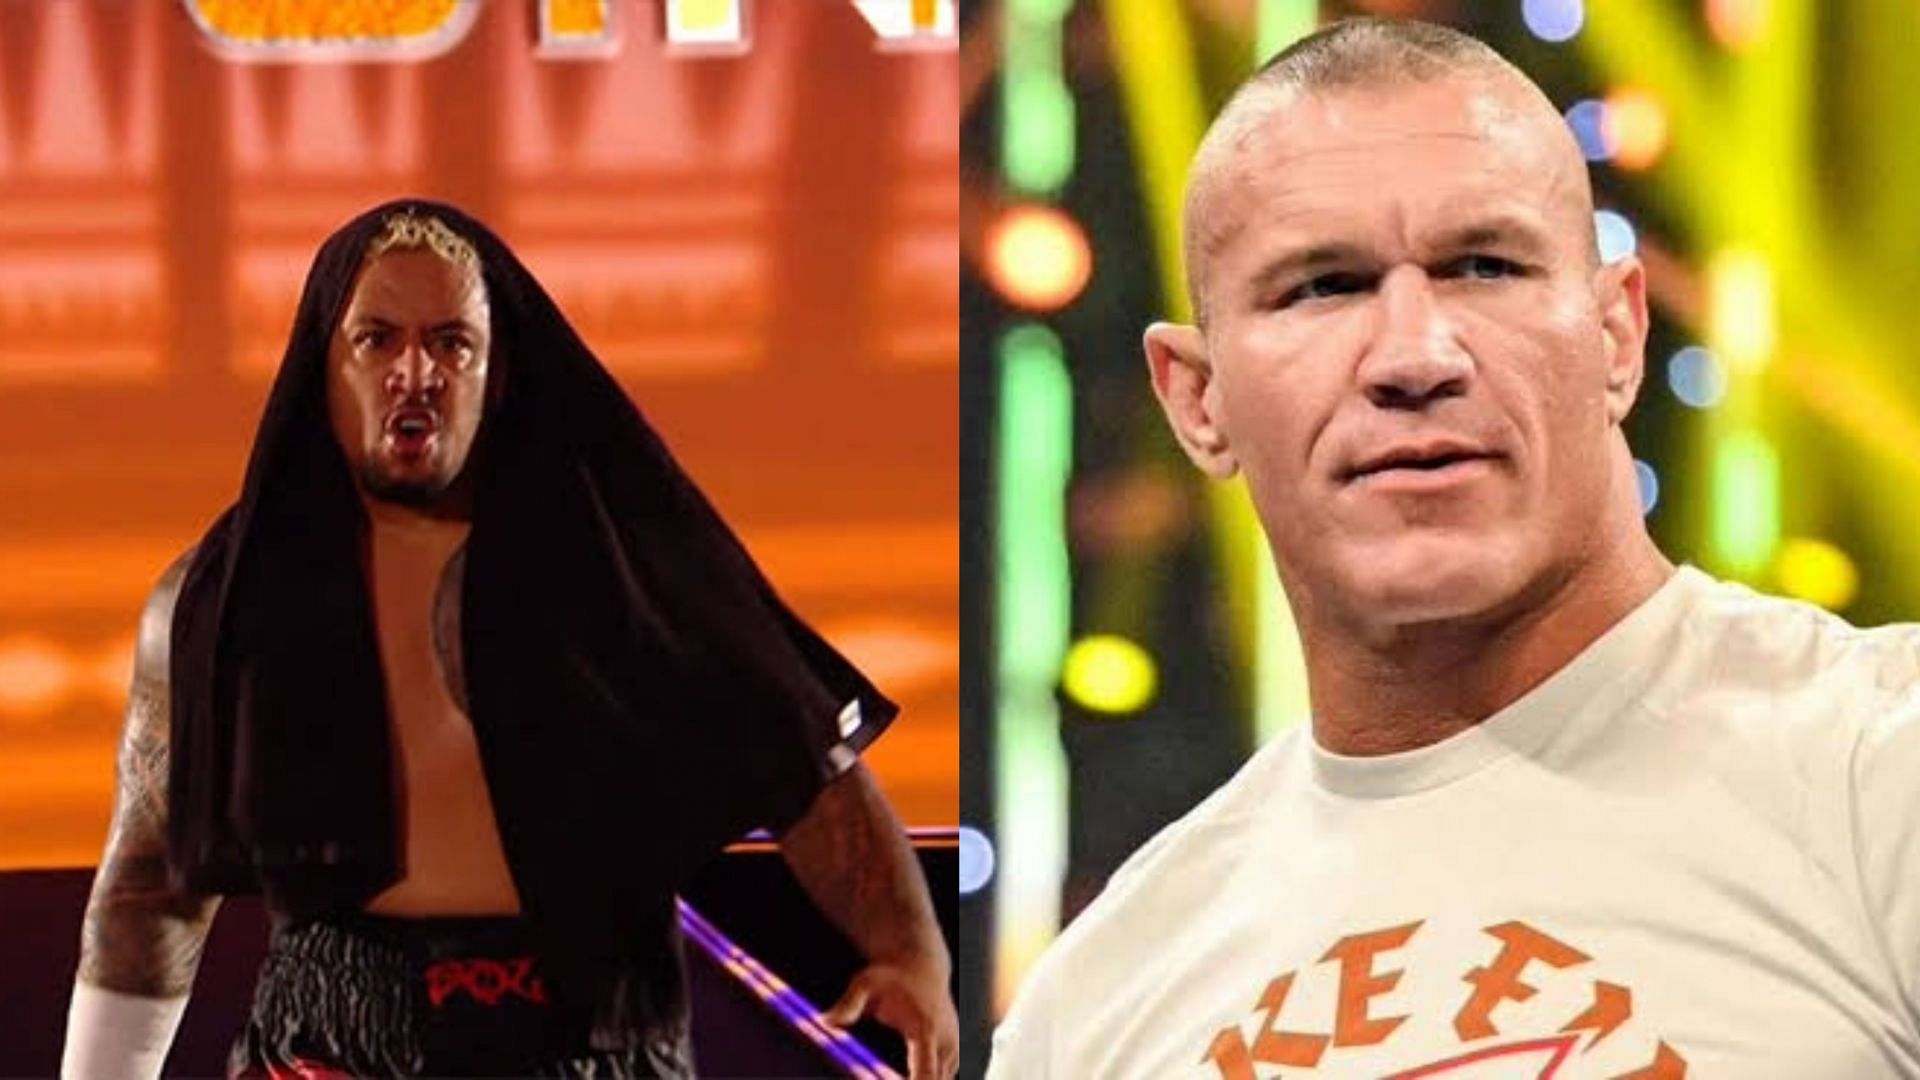 Solo Sikoa (left); and Randy Orton (right)